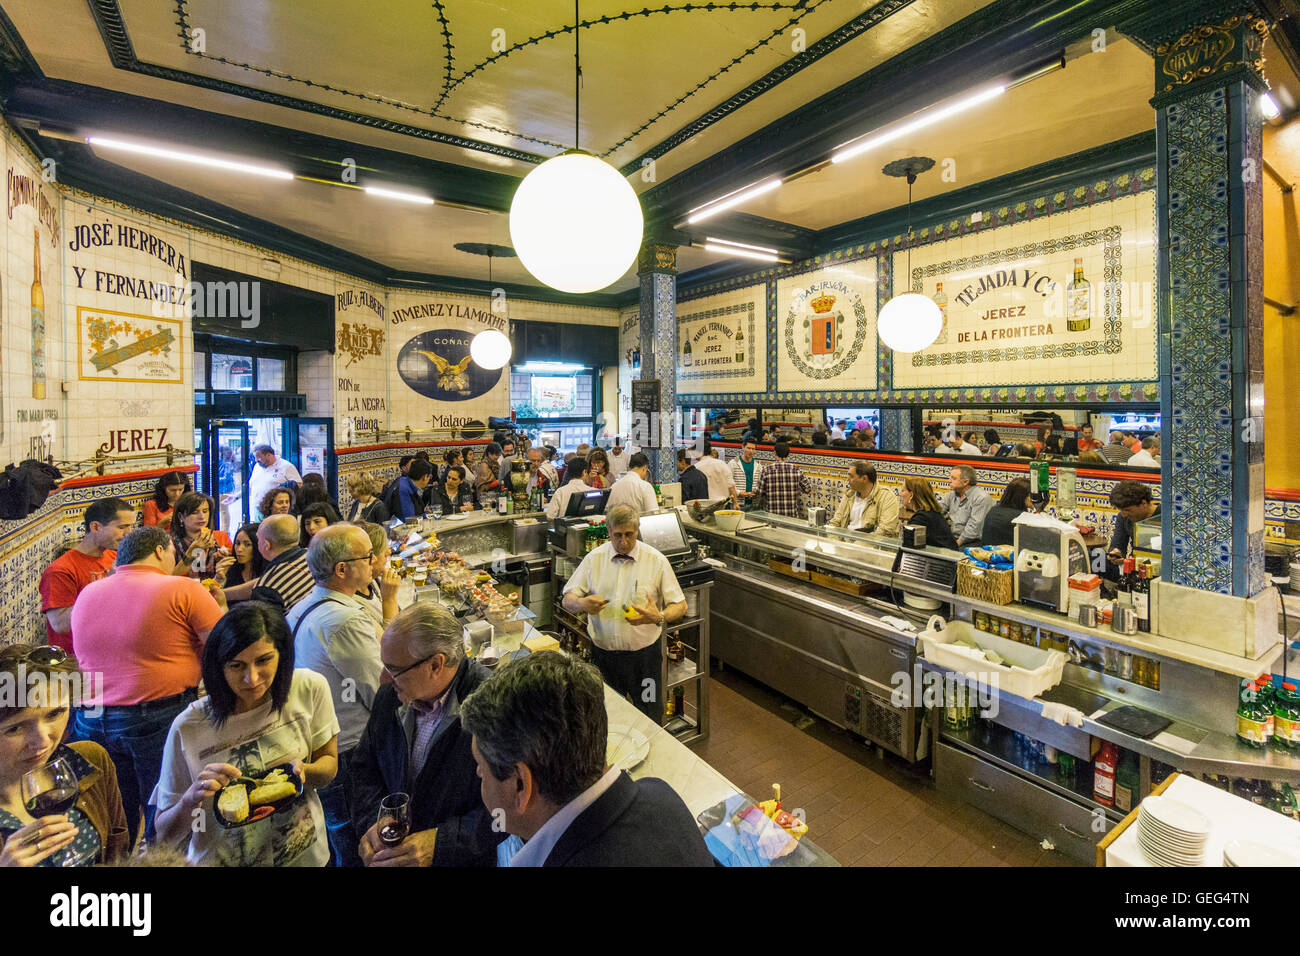 Tapaz Bar in Bilbao, Basque Country, Spain Stock Photo